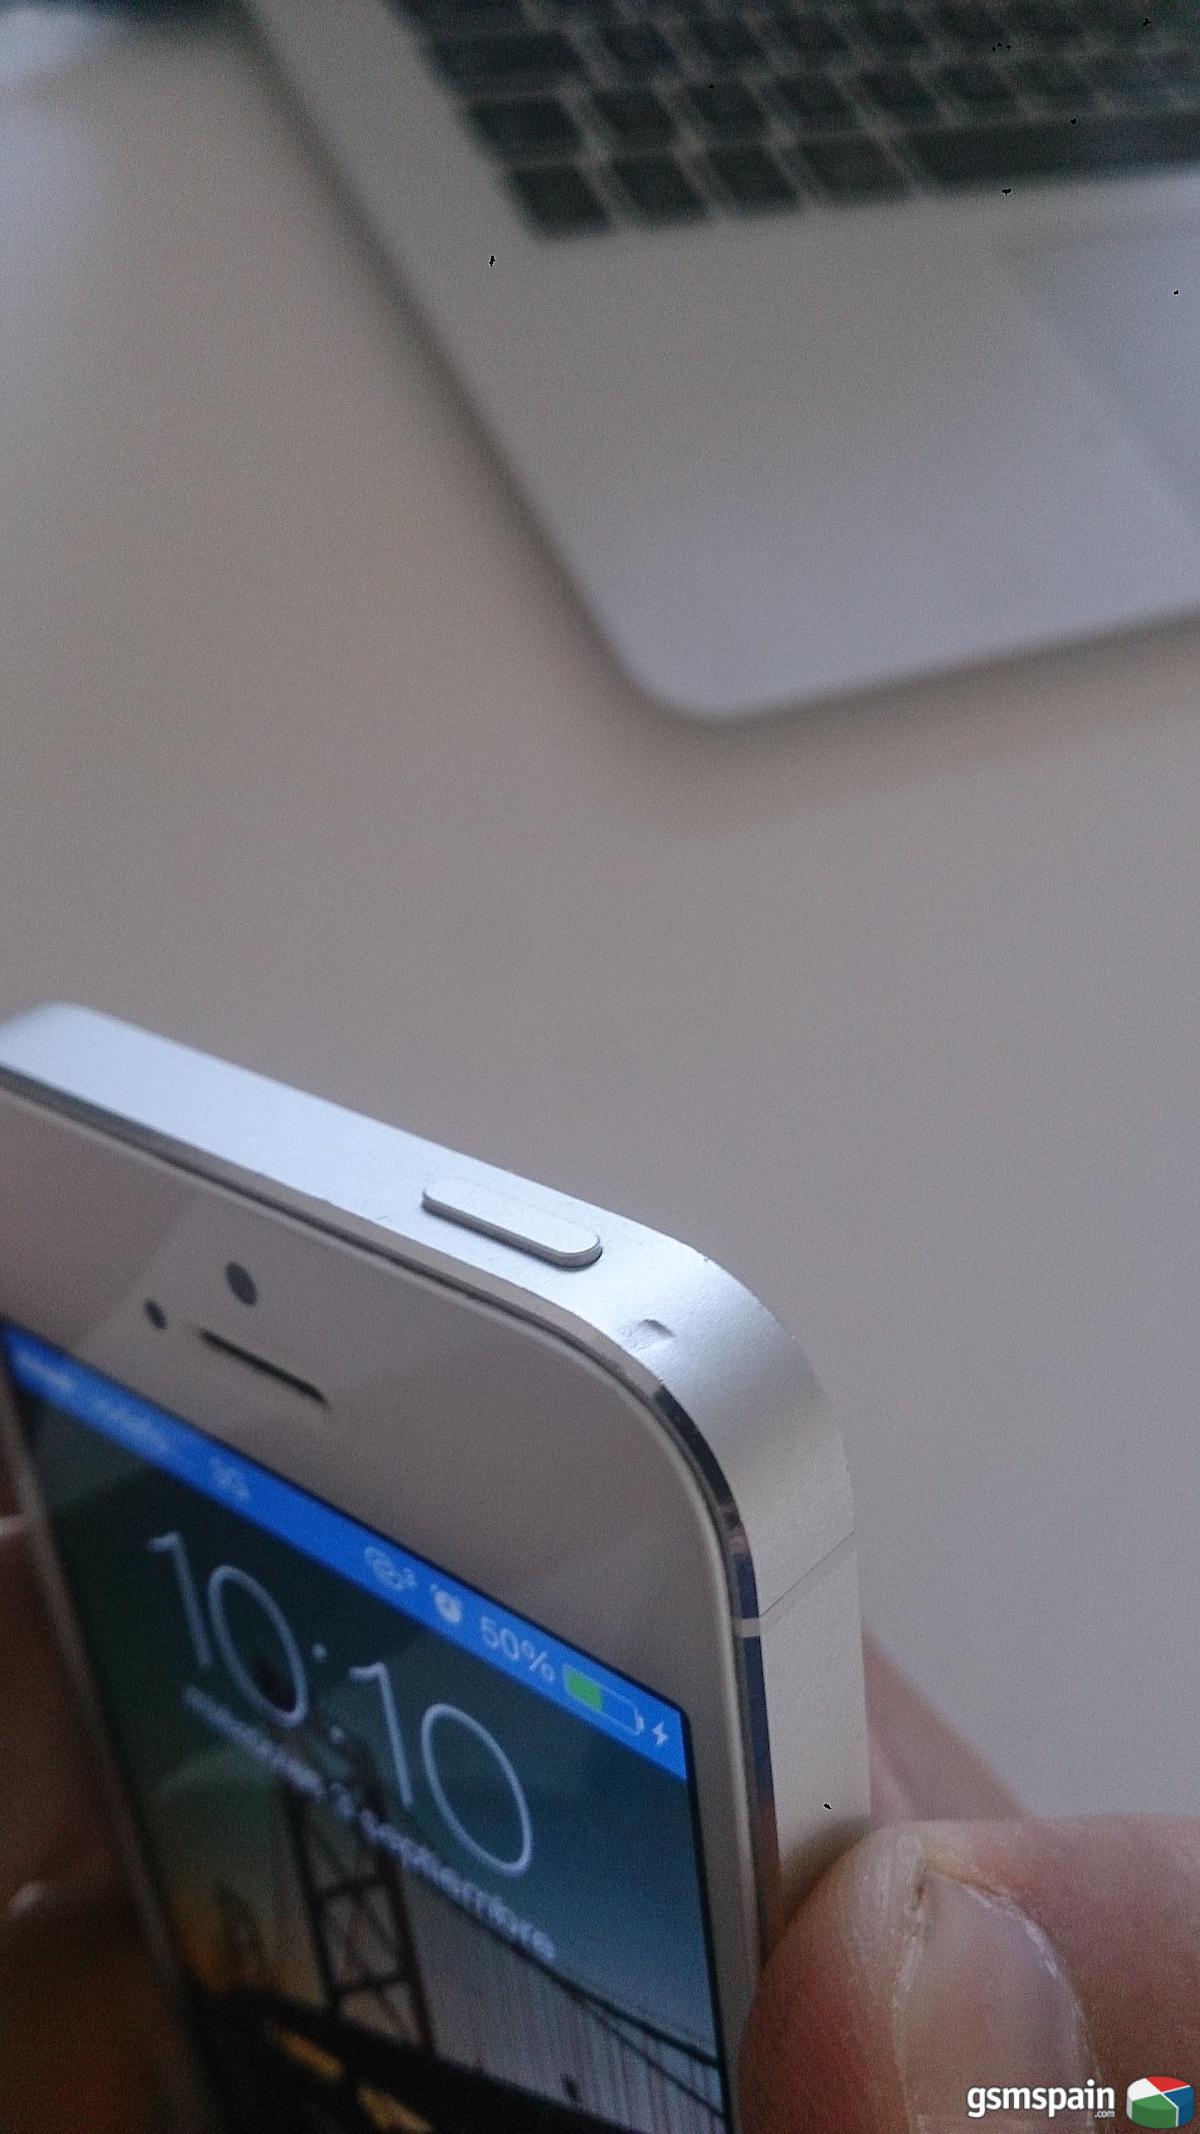 [VENDO] Iphone 5s 16gb Blanco-gris Vodafone